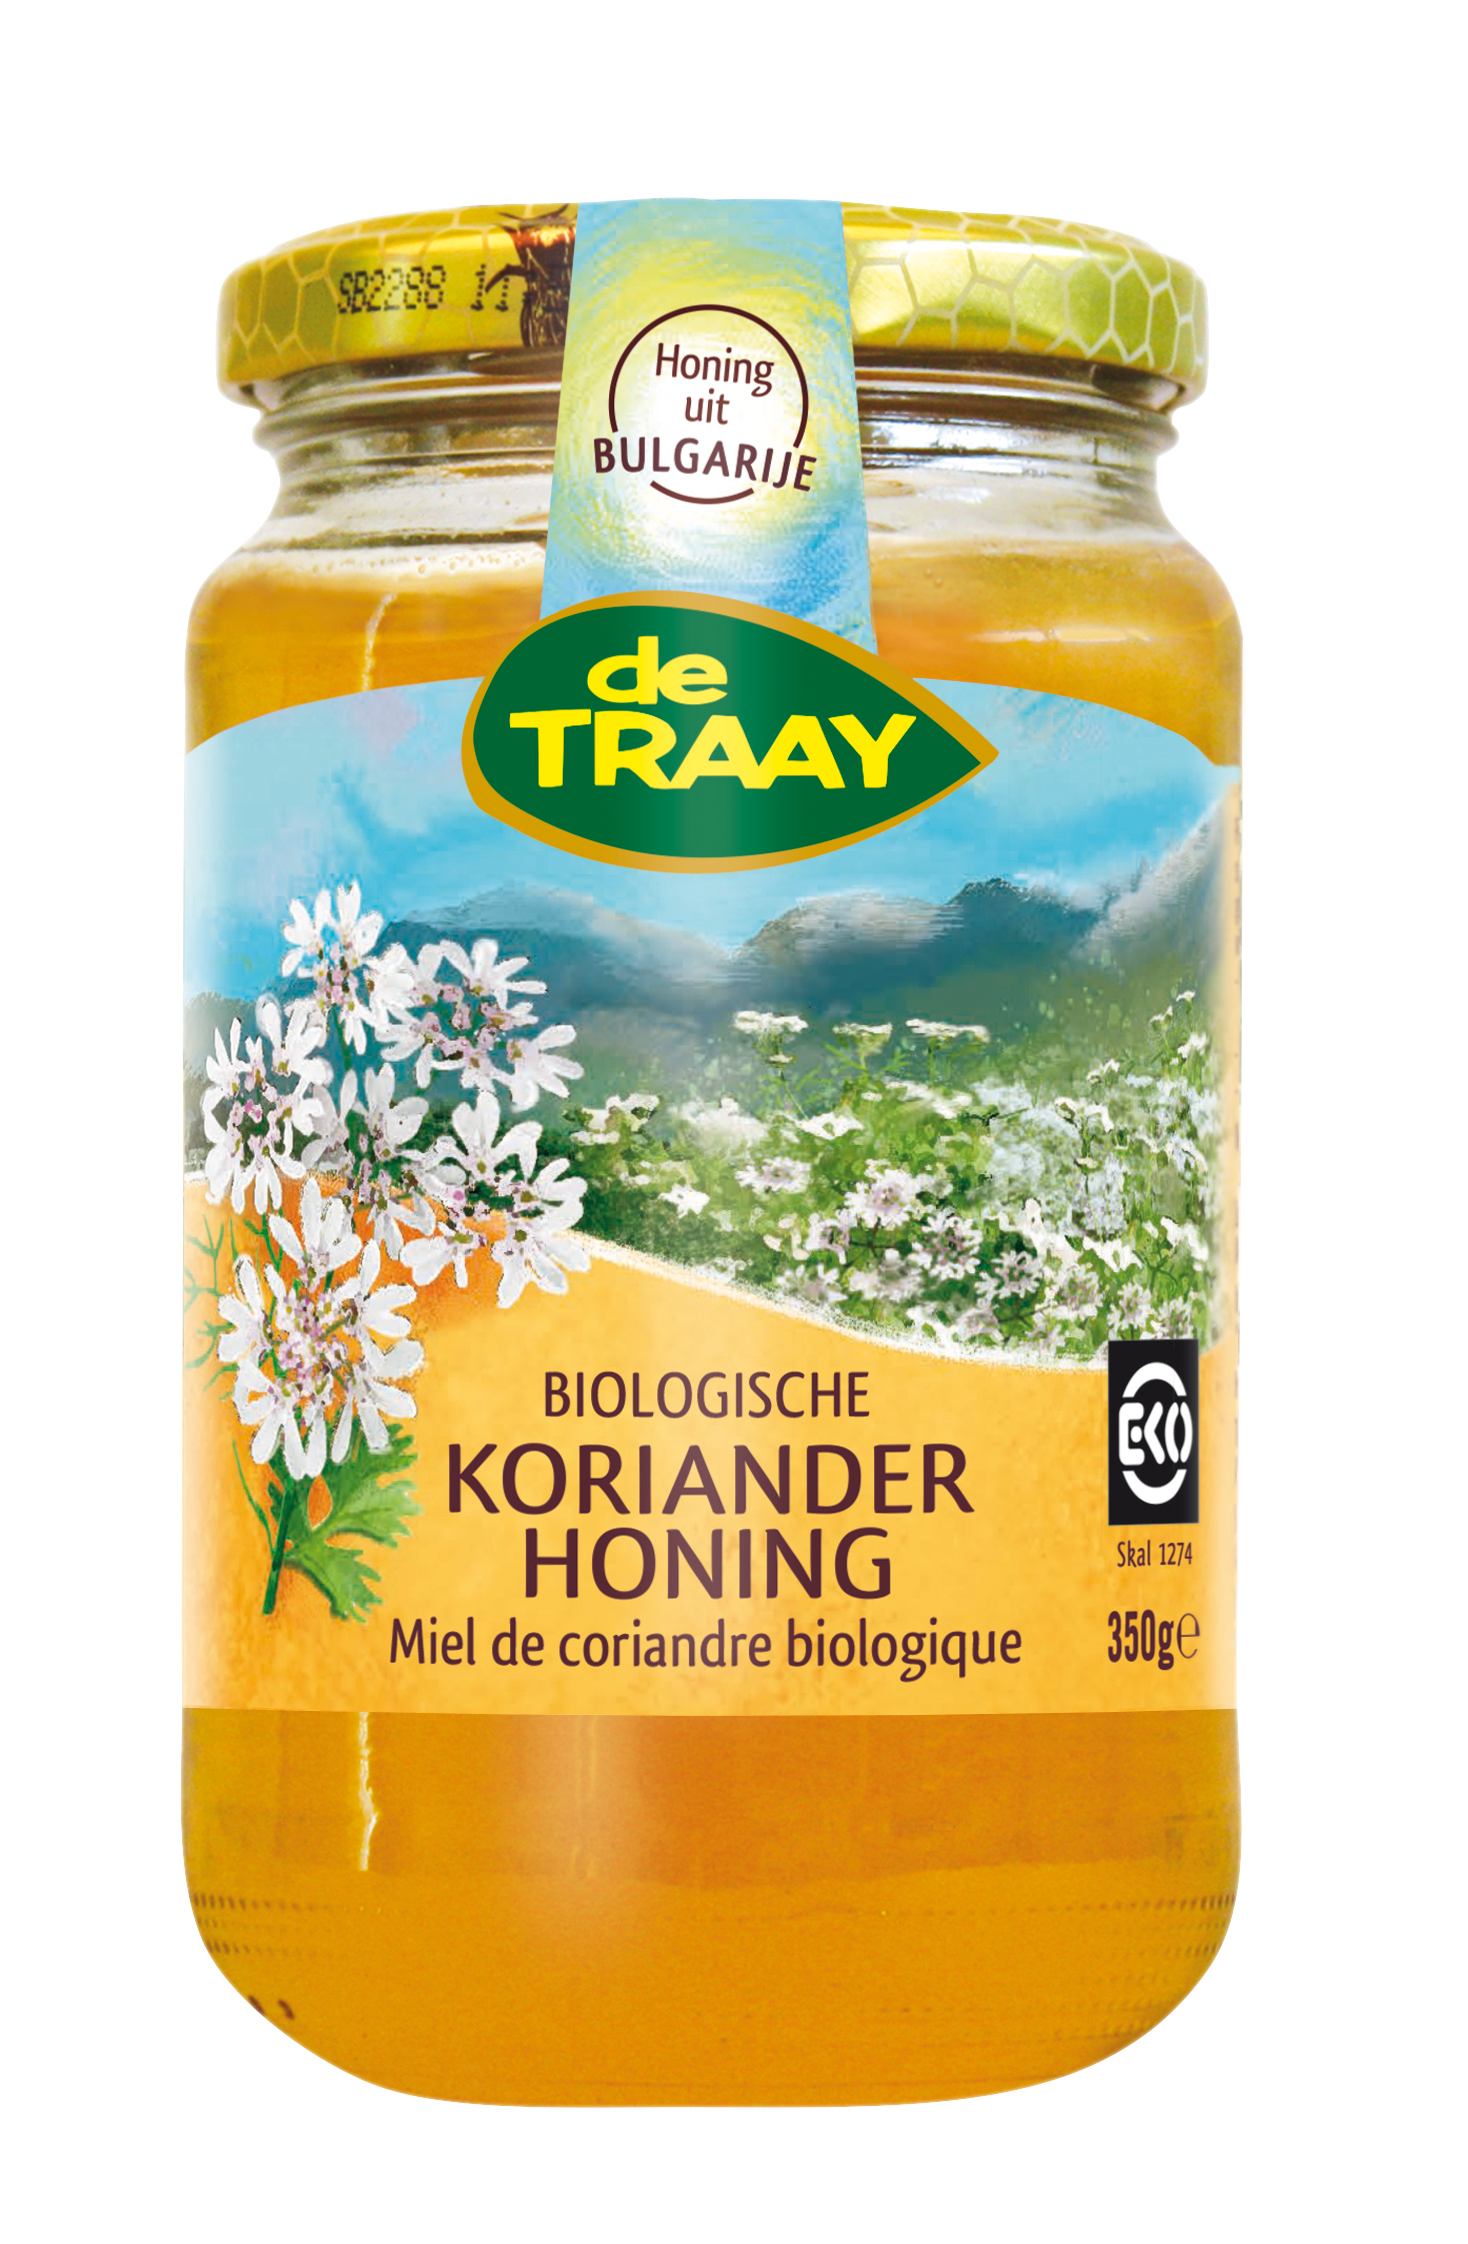 Miel de coriandre biologique